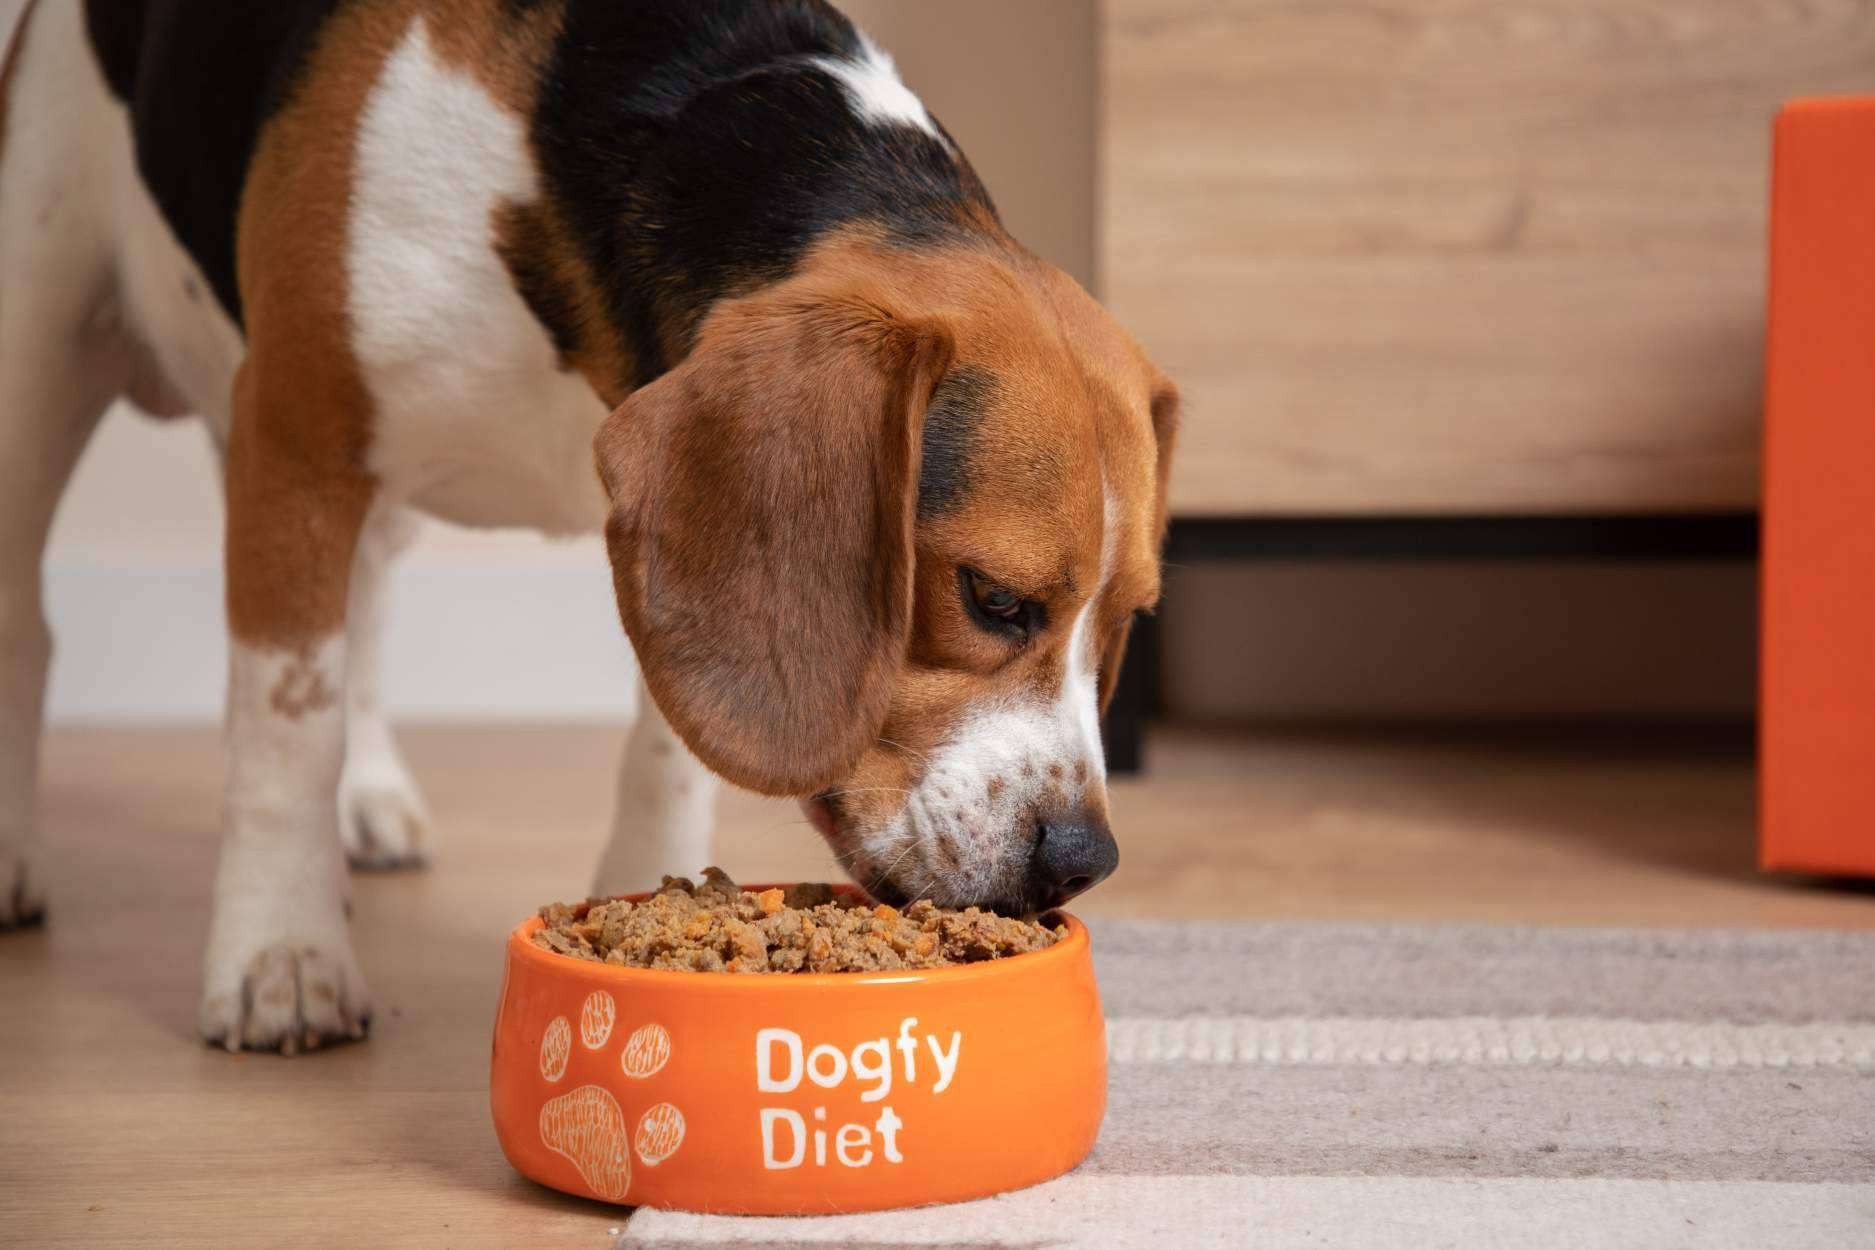  Dogfy Diet pone a disposición alimentación natural para perros elaborada por expertos 